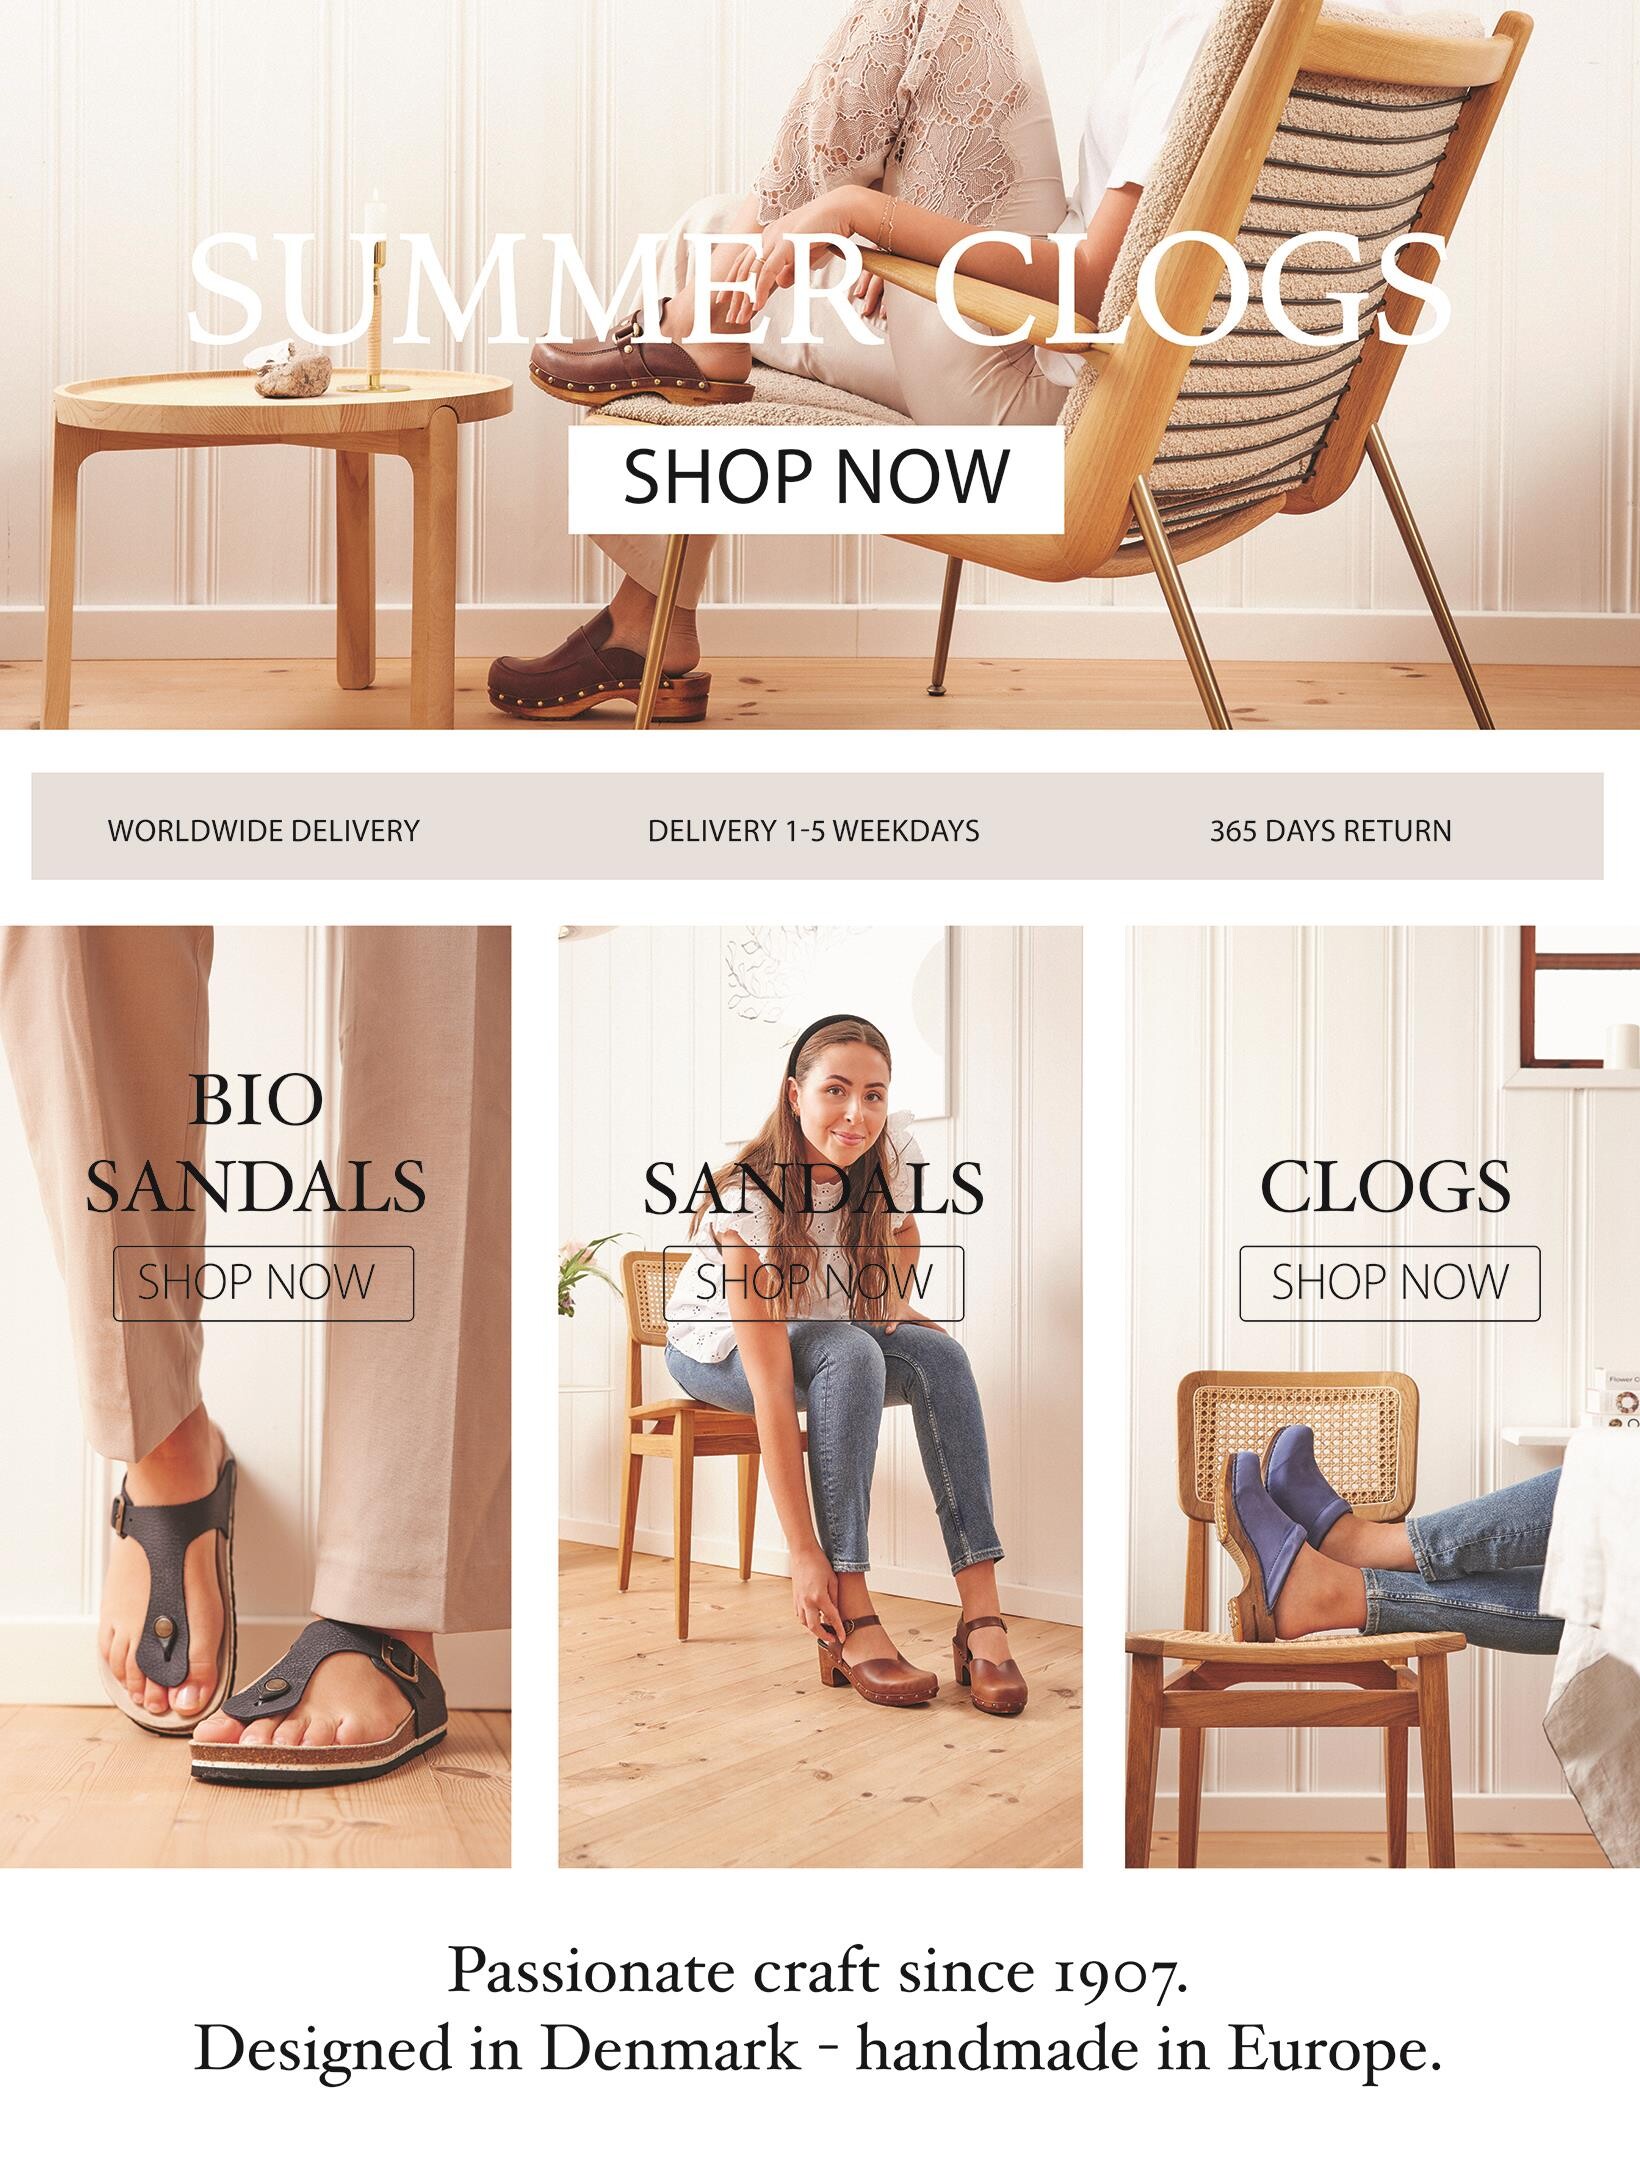 Sanita® clogs for women and men - buy in Sanita's own webshop